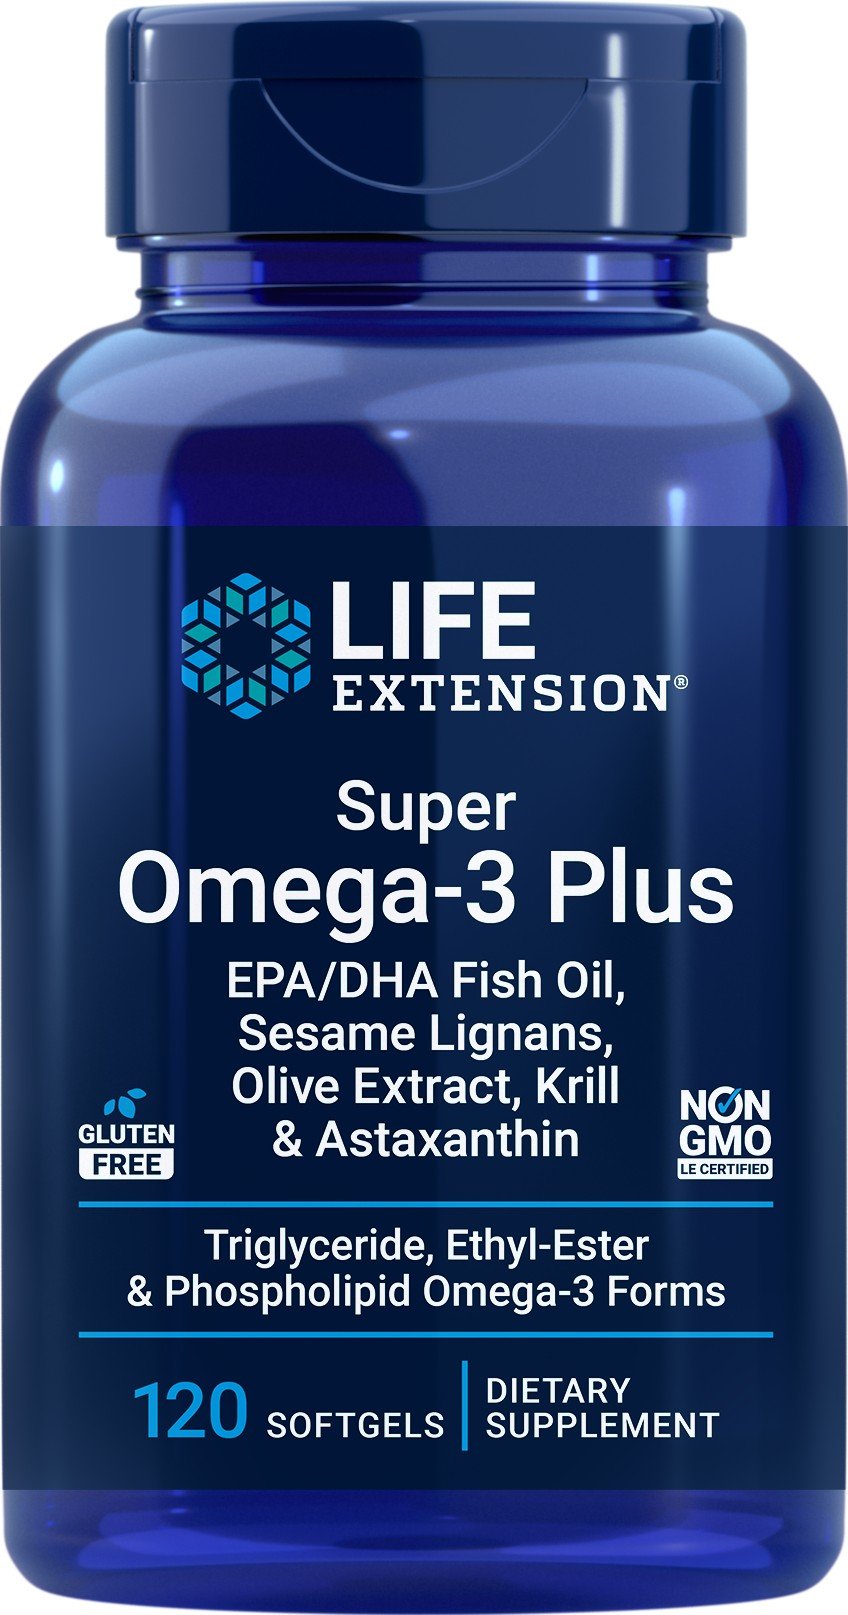 Life Extension Super Omega-3 Plus 120 Softgel